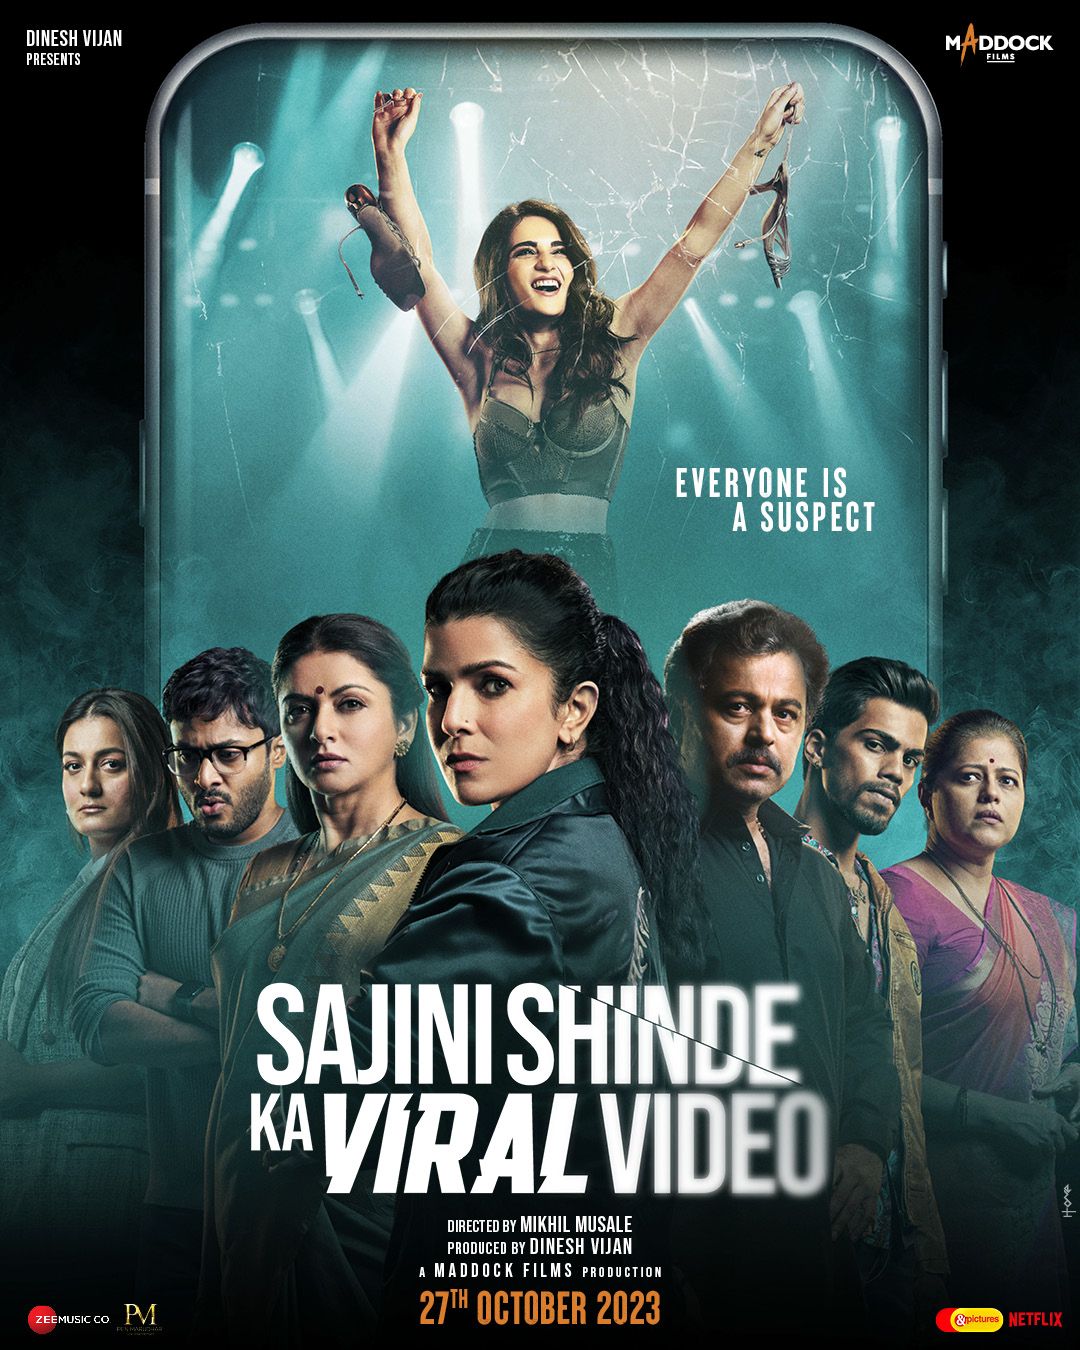 Sajini Shinde Ka Viral Video 2023 Hindi 1xBet